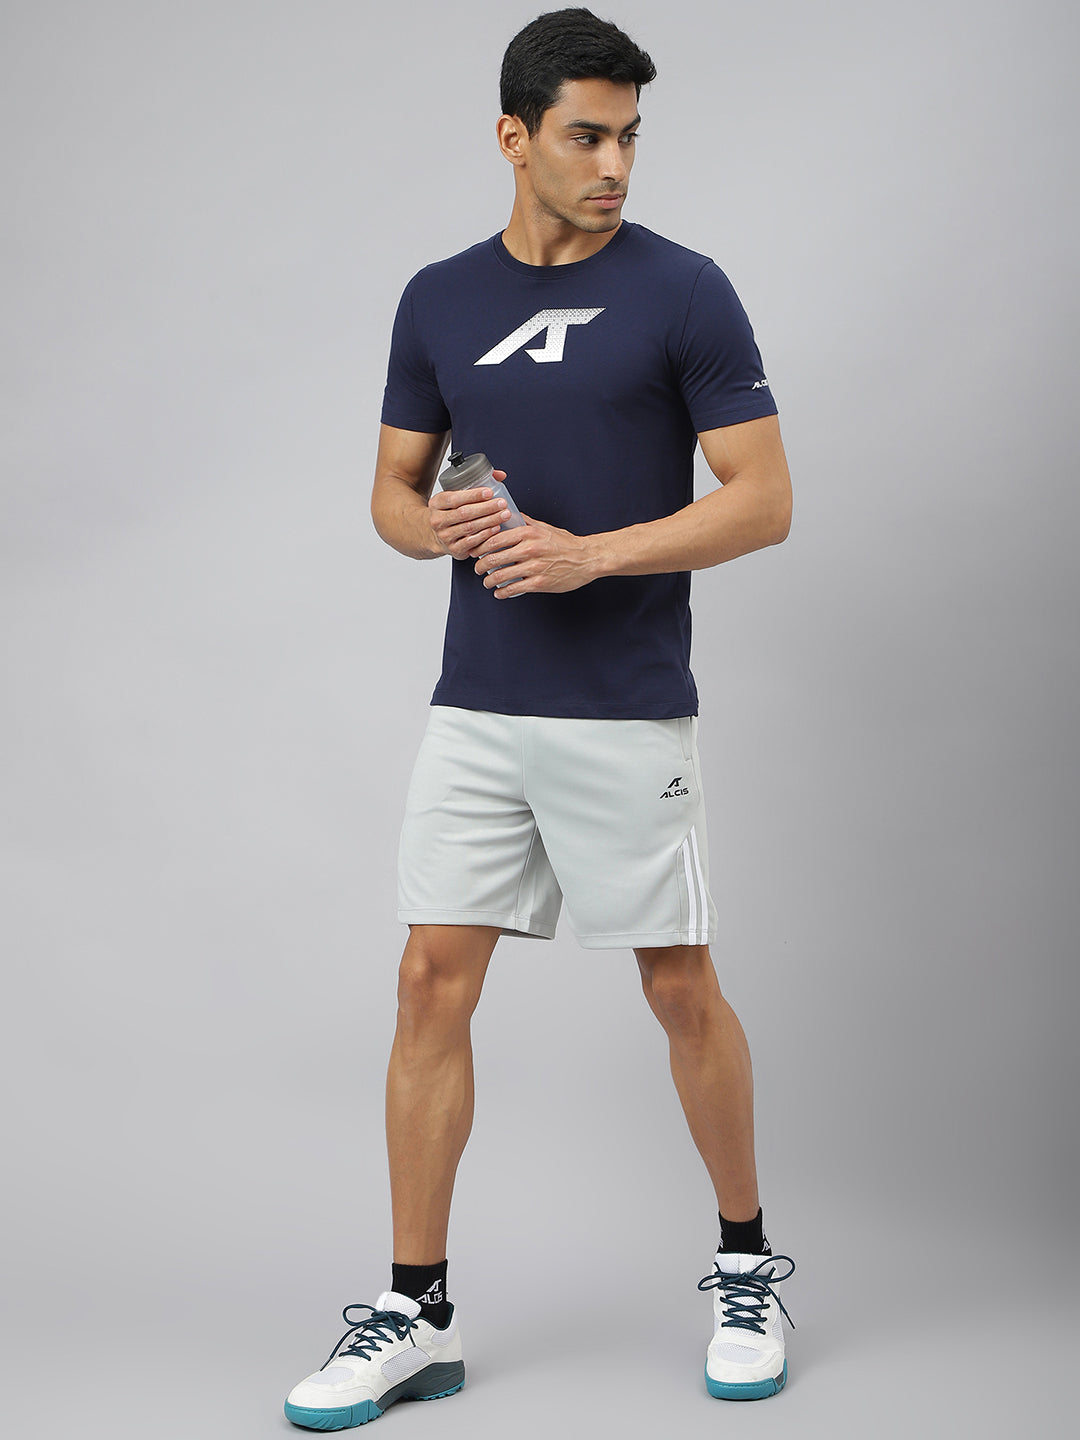 Alcis Men Navy Soft-Touch Regular-Fit Athleisure T-Shirt